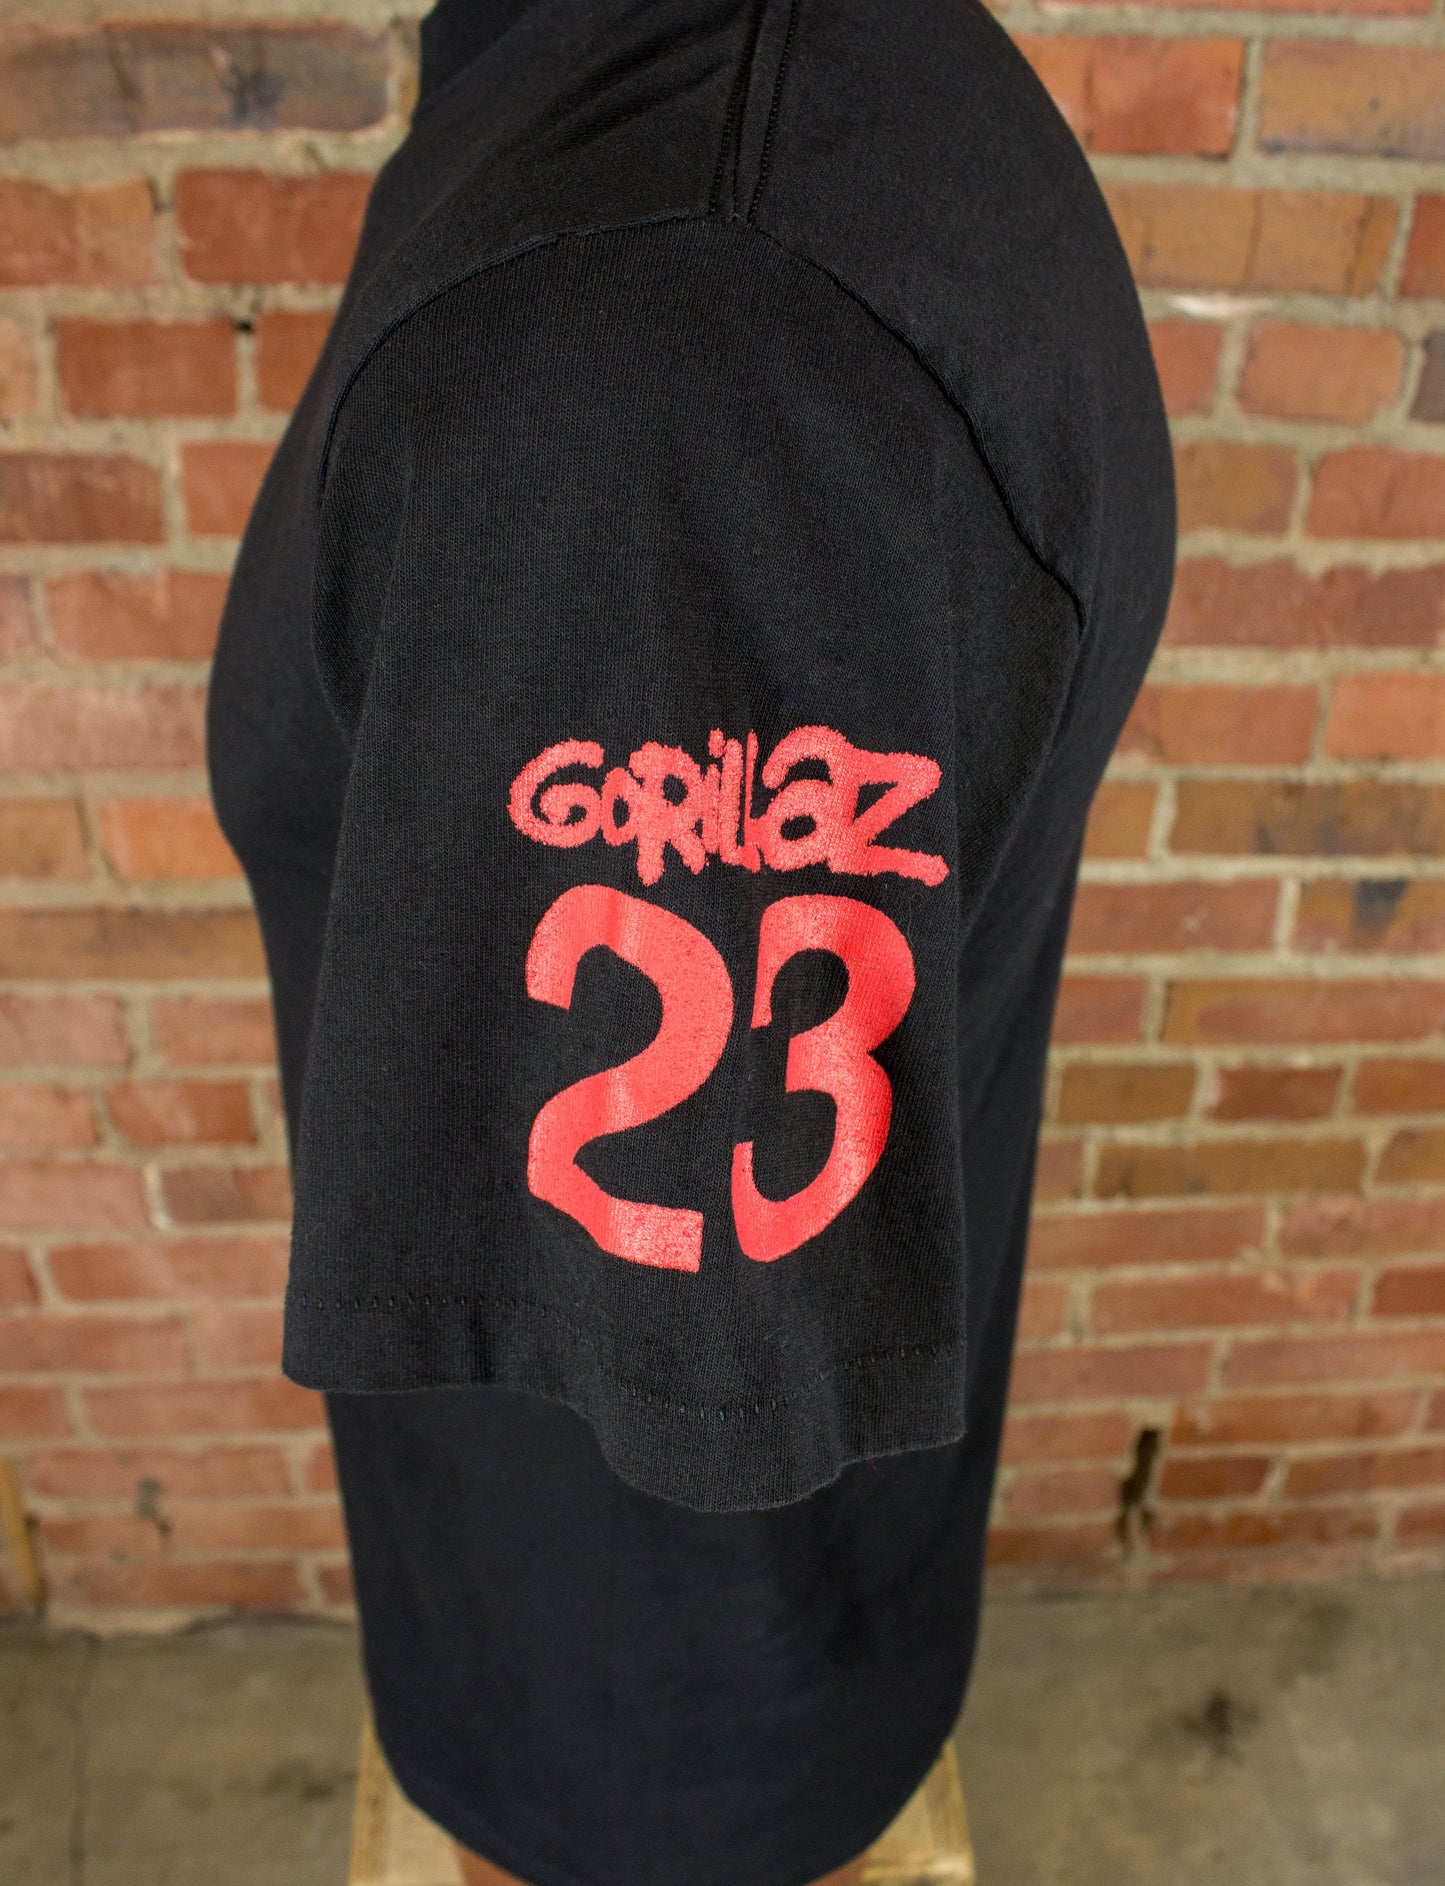 Gorillaz 2001 Self Titled Album Artwork Black and Red Concert T Shirt Unisex Medium